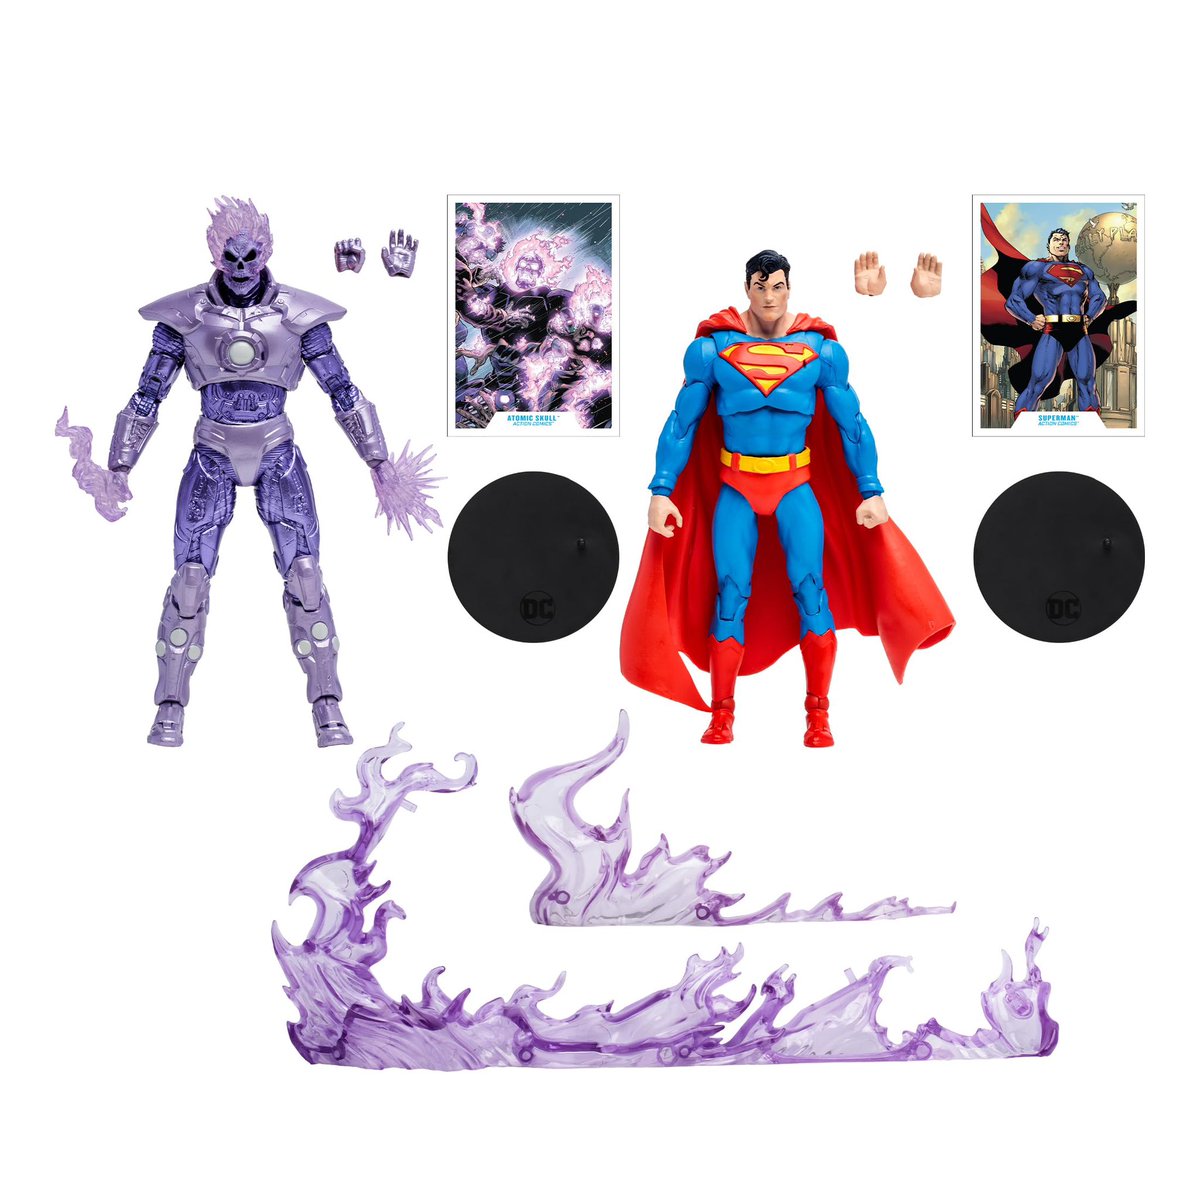 Amazon exclusive McFarlane Toys, Gold Label Atomic Skull vs. Superman 2-Pack!

amazon.com/dp/B0BXBHF1Y2?…

#ad #ActionFigure #ActionFigures #DCComics #AtomicSkull #Superman #McFarlaneToys